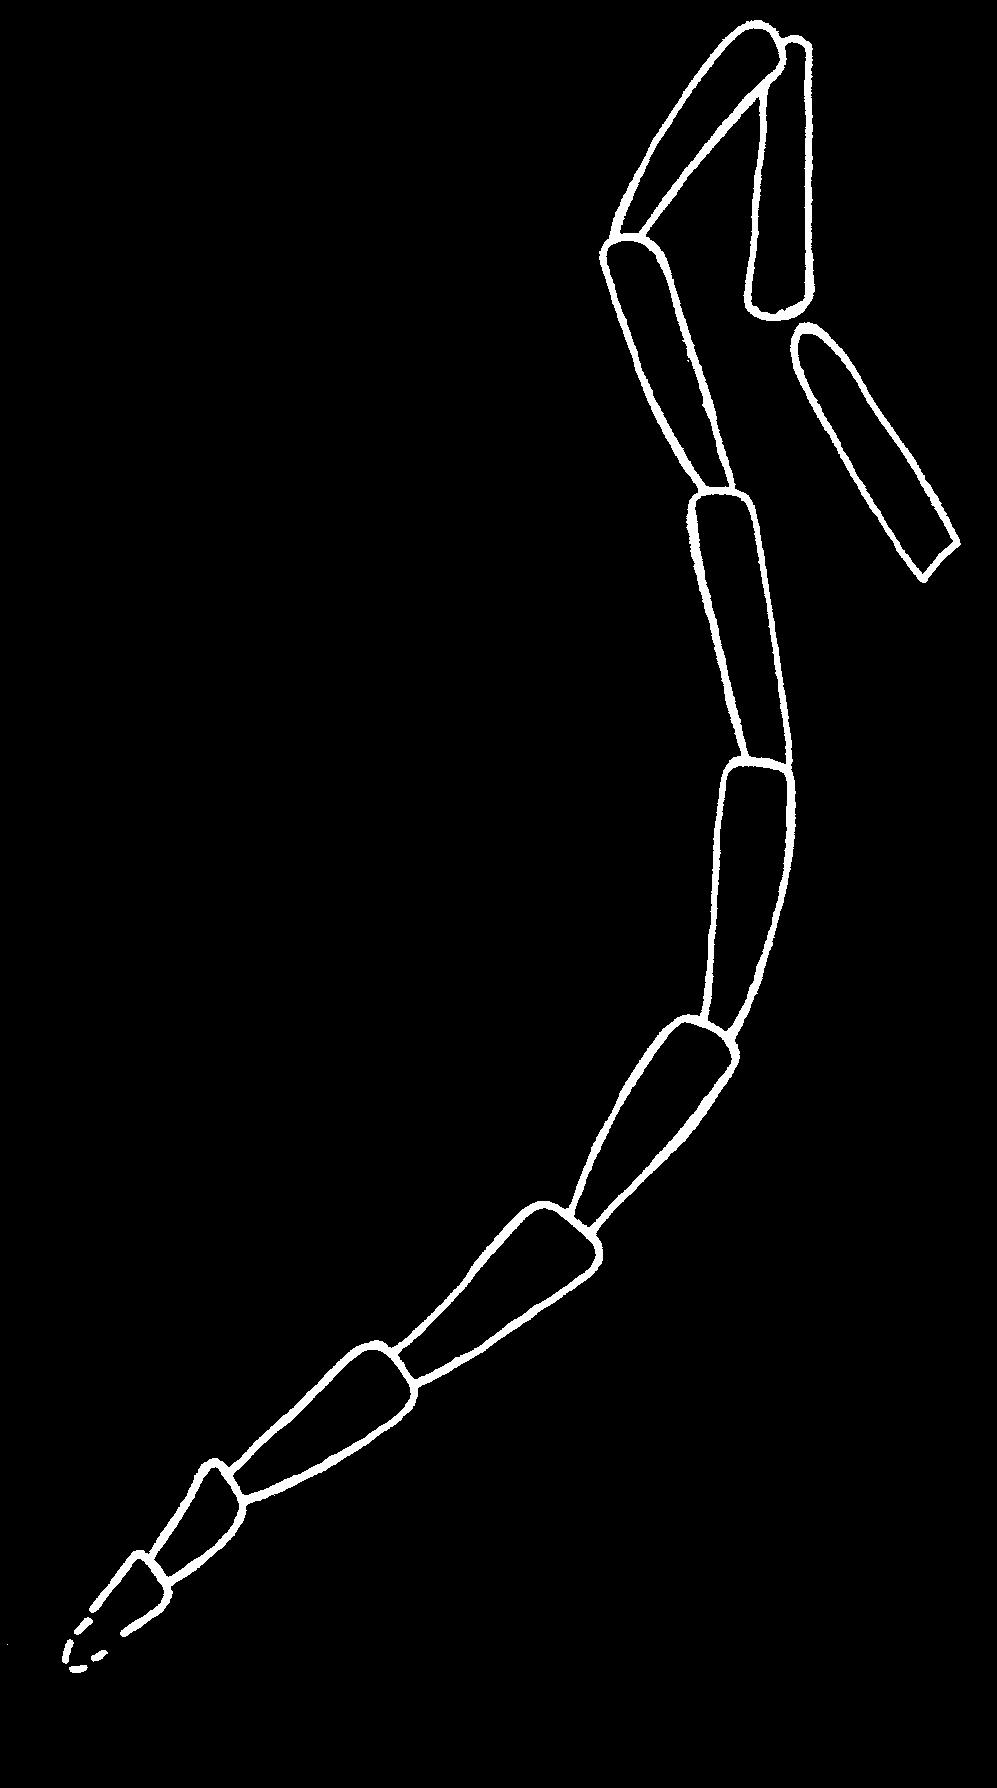 Fore femora swollen (Fig. 4). Measurements (mm): body length, 12.5; body width, 3; elytron length, 8.6.